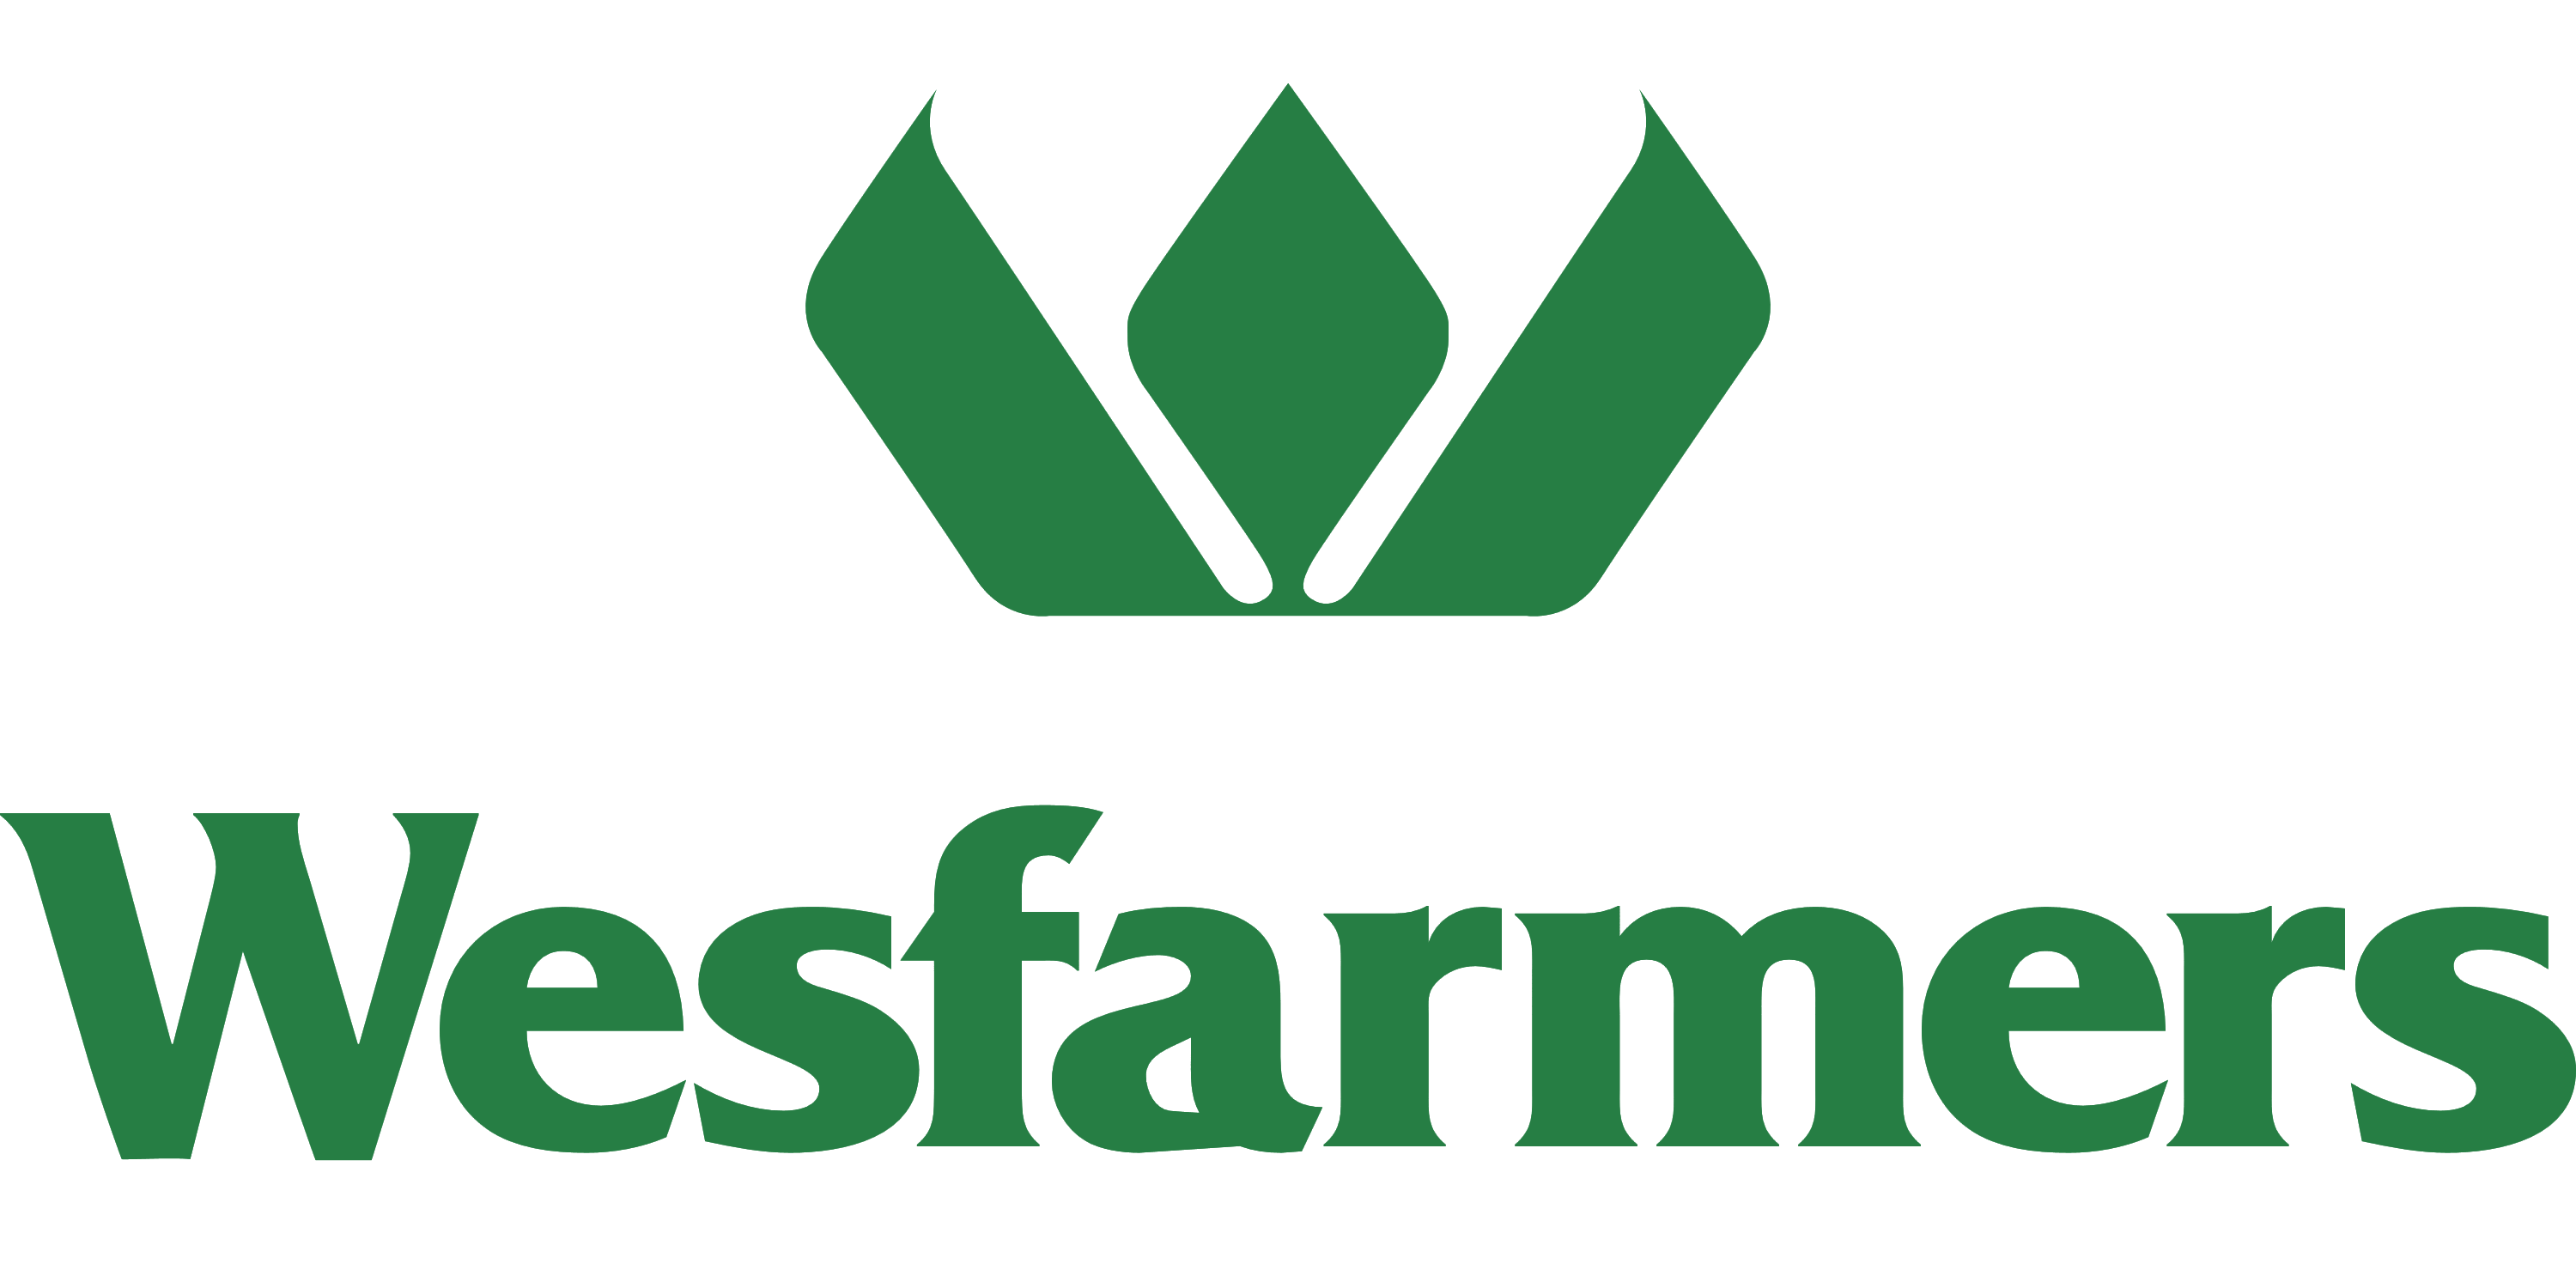 Wesfarmers logo, logotype